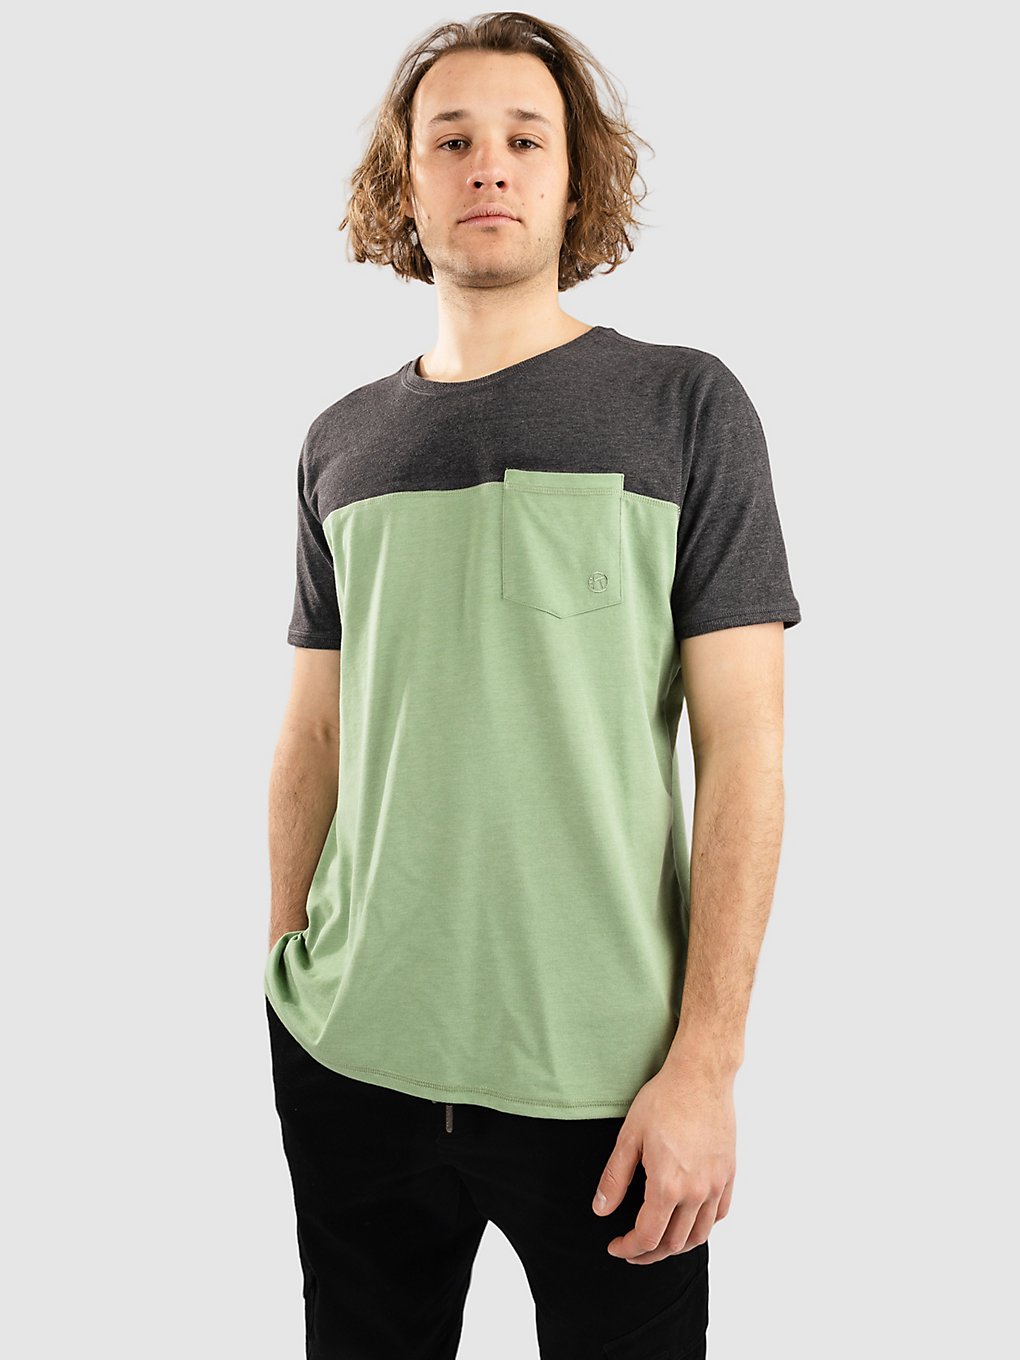 Kazane Filip T-Shirt charchthr kaufen